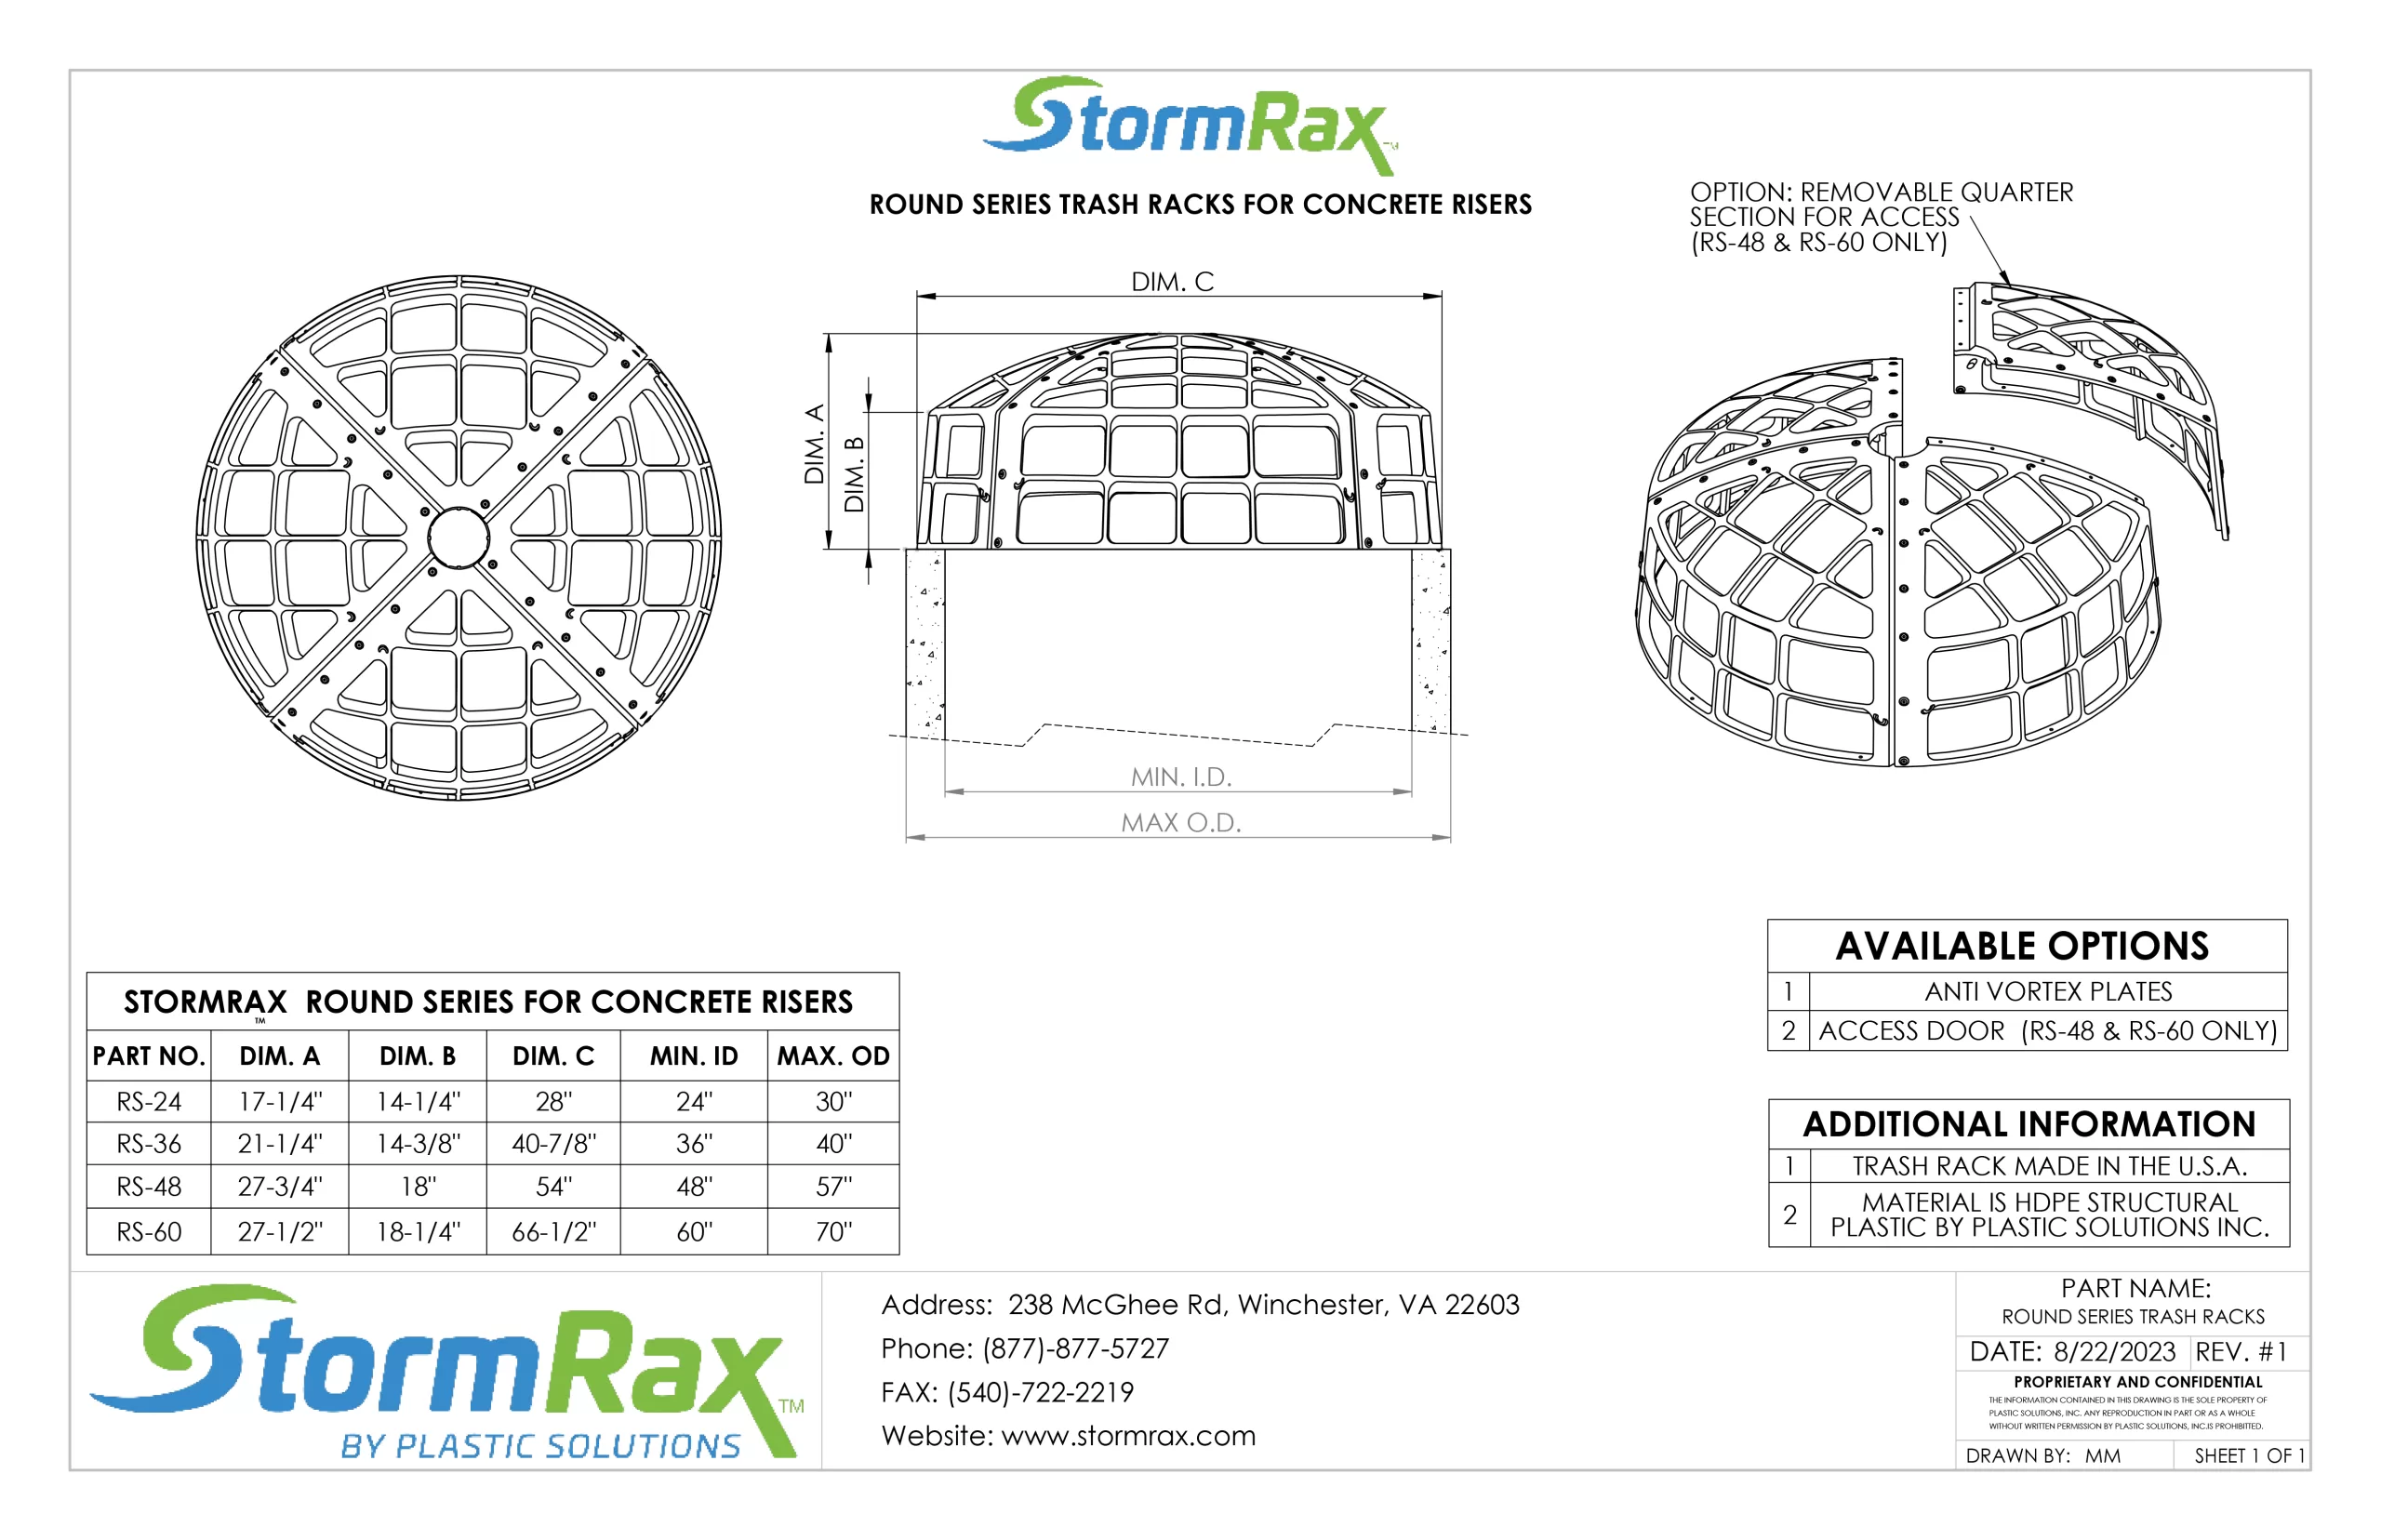 Technical drawing for stormrax round series trash racks